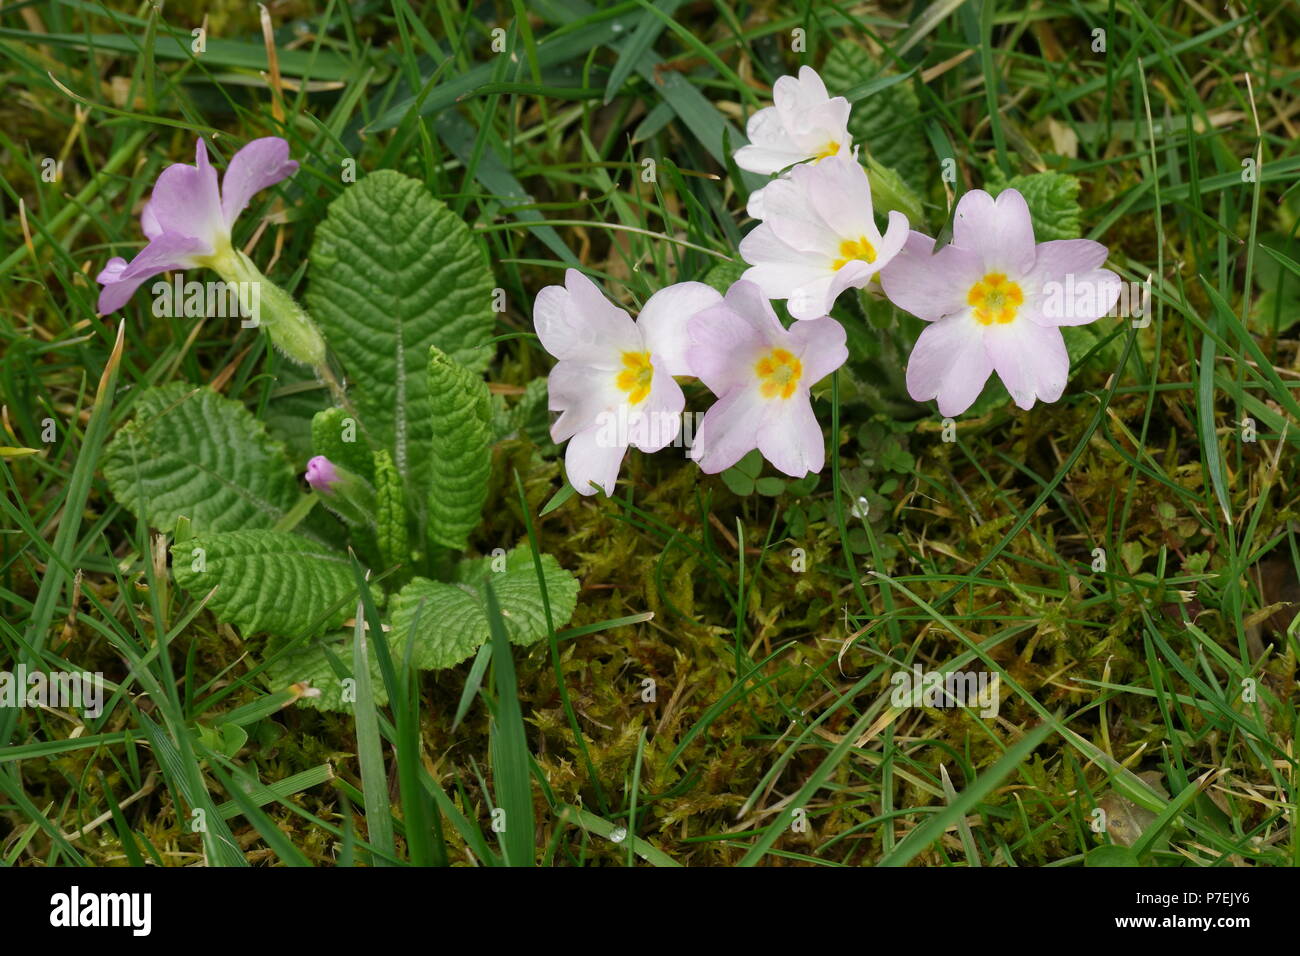 Primula vulgaris (Garten-Primel) (Primrose) (Primevère commune) Stock Photo